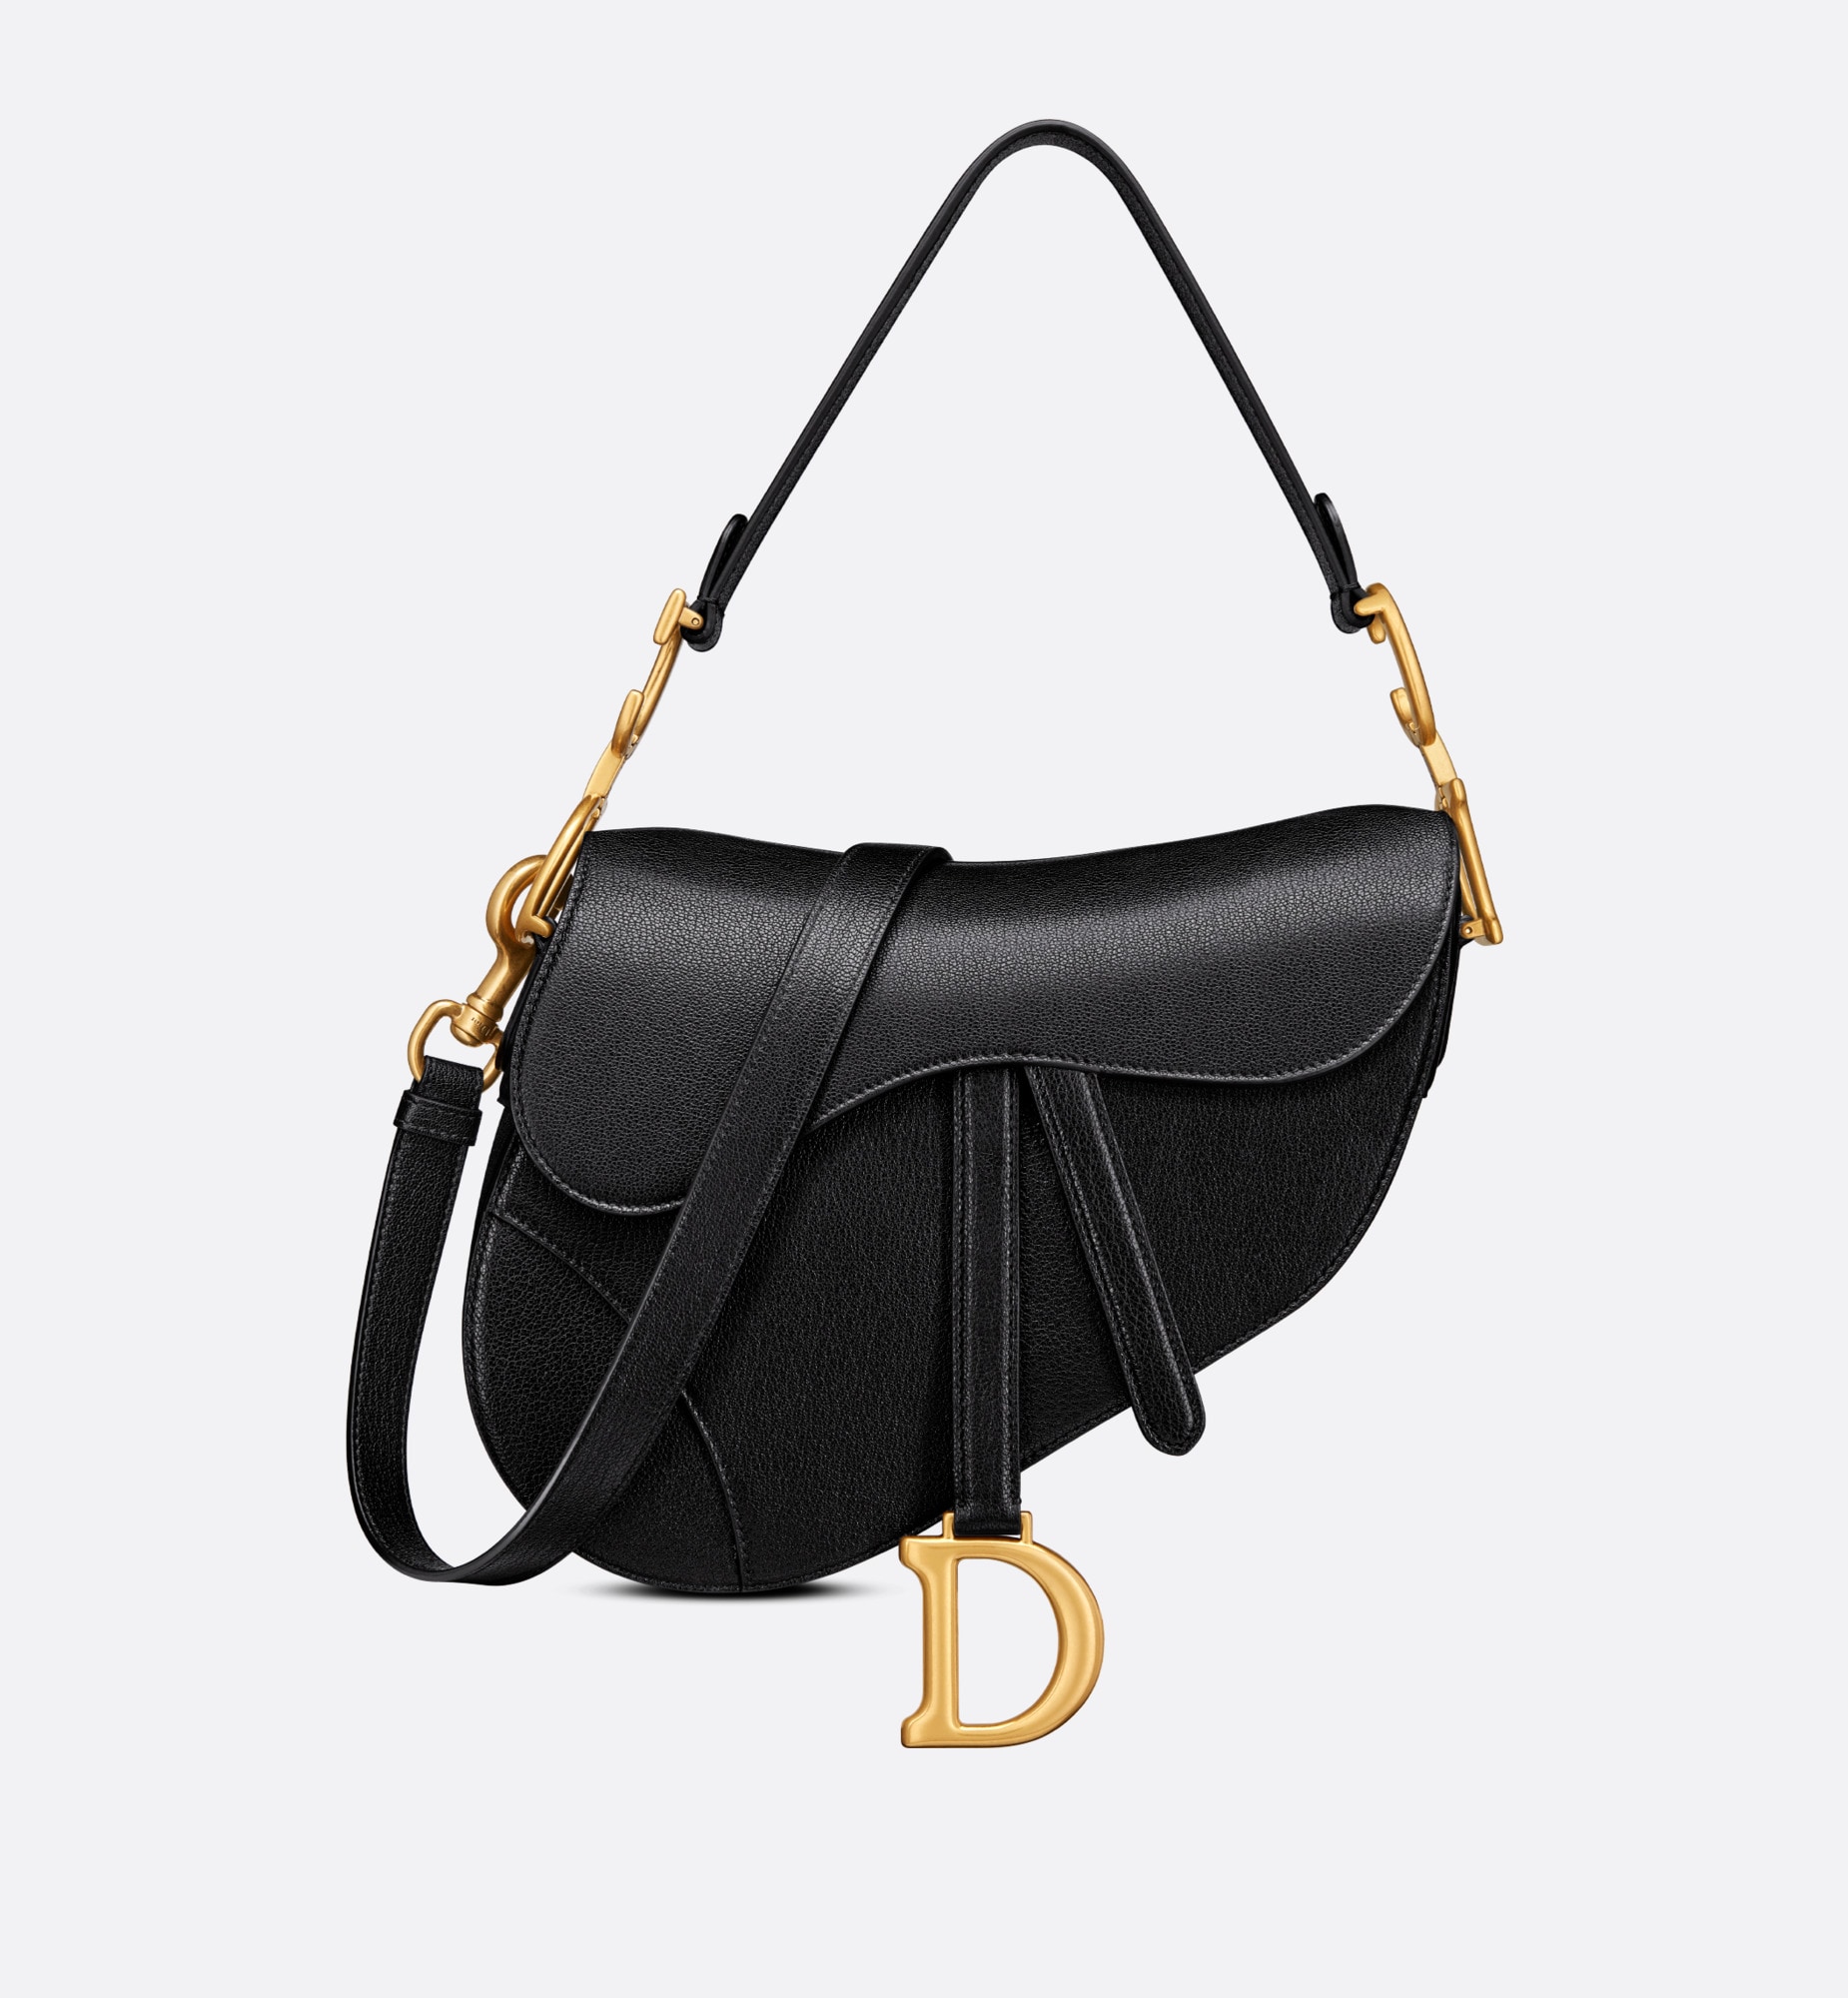 Dior saddle bag with strap black goatskin